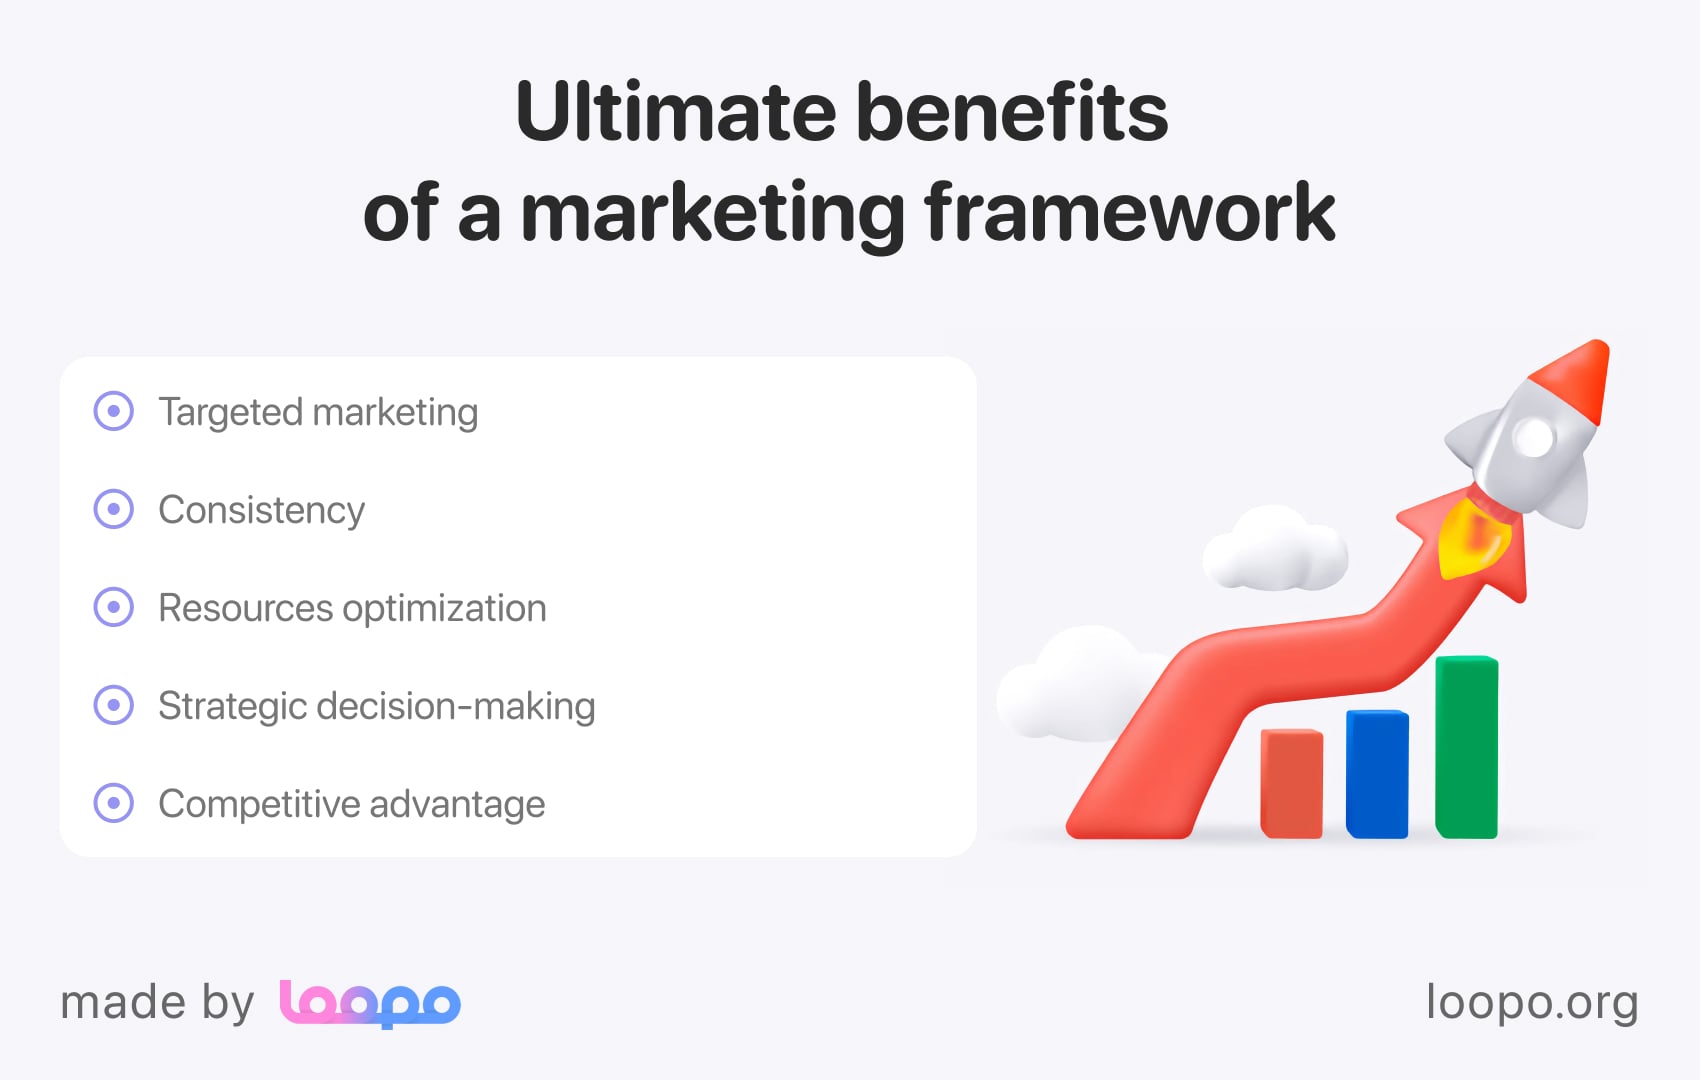 Top benefits of marketing framework